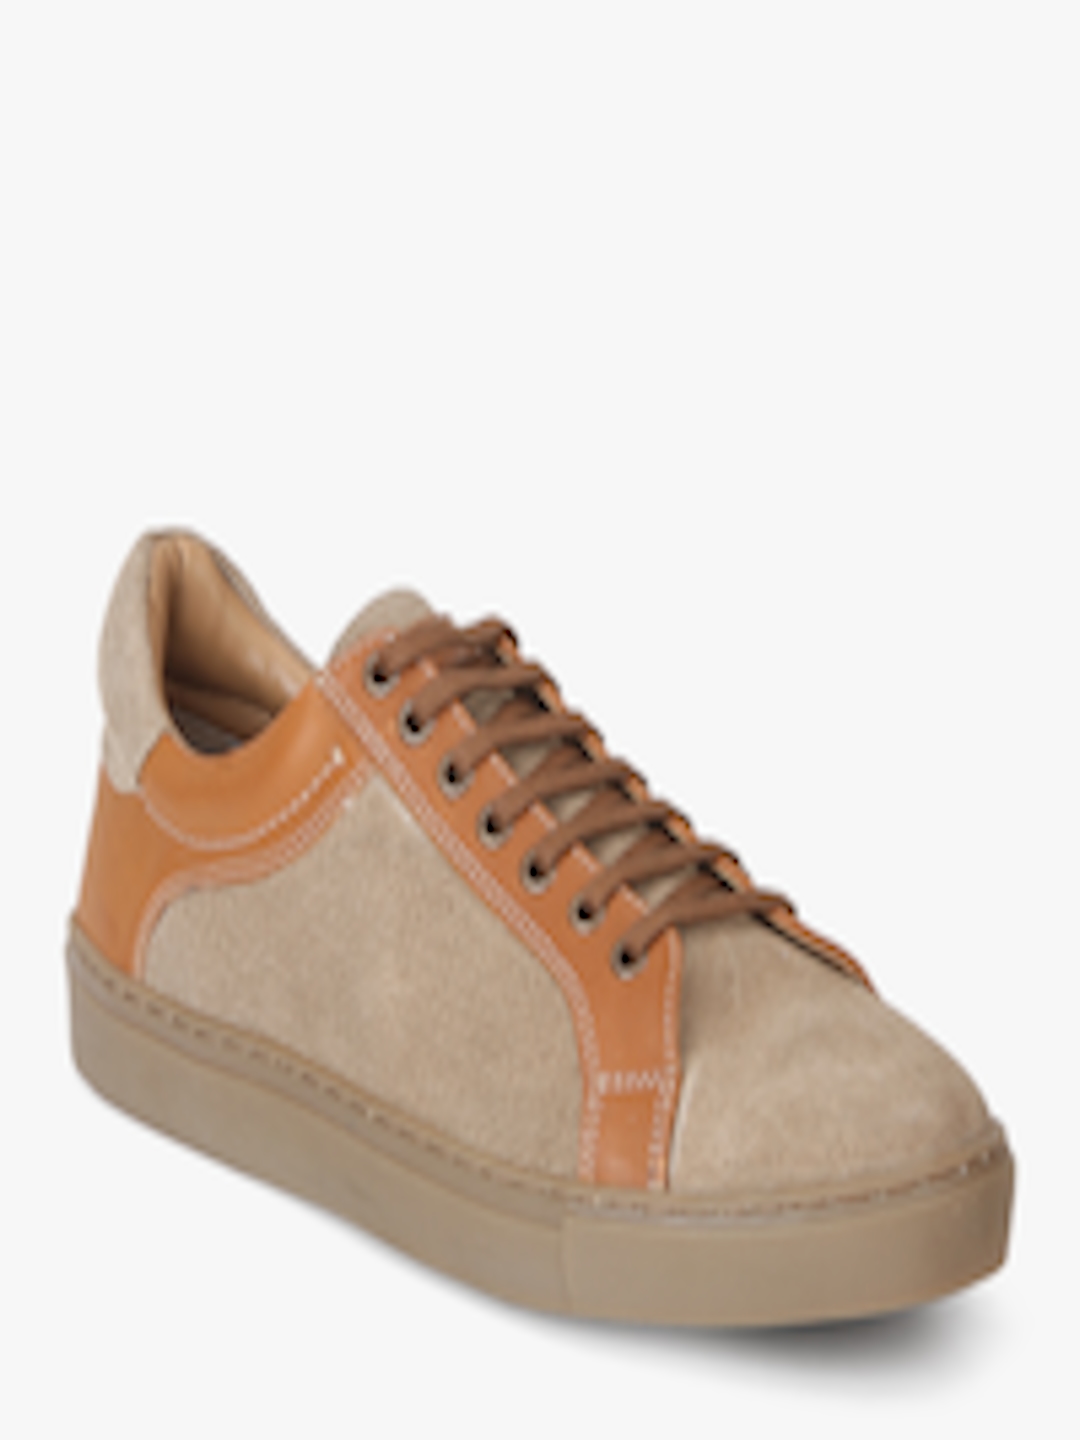 Buy Beige Sneakers - Casual Shoes for Men 7173891 | Myntra